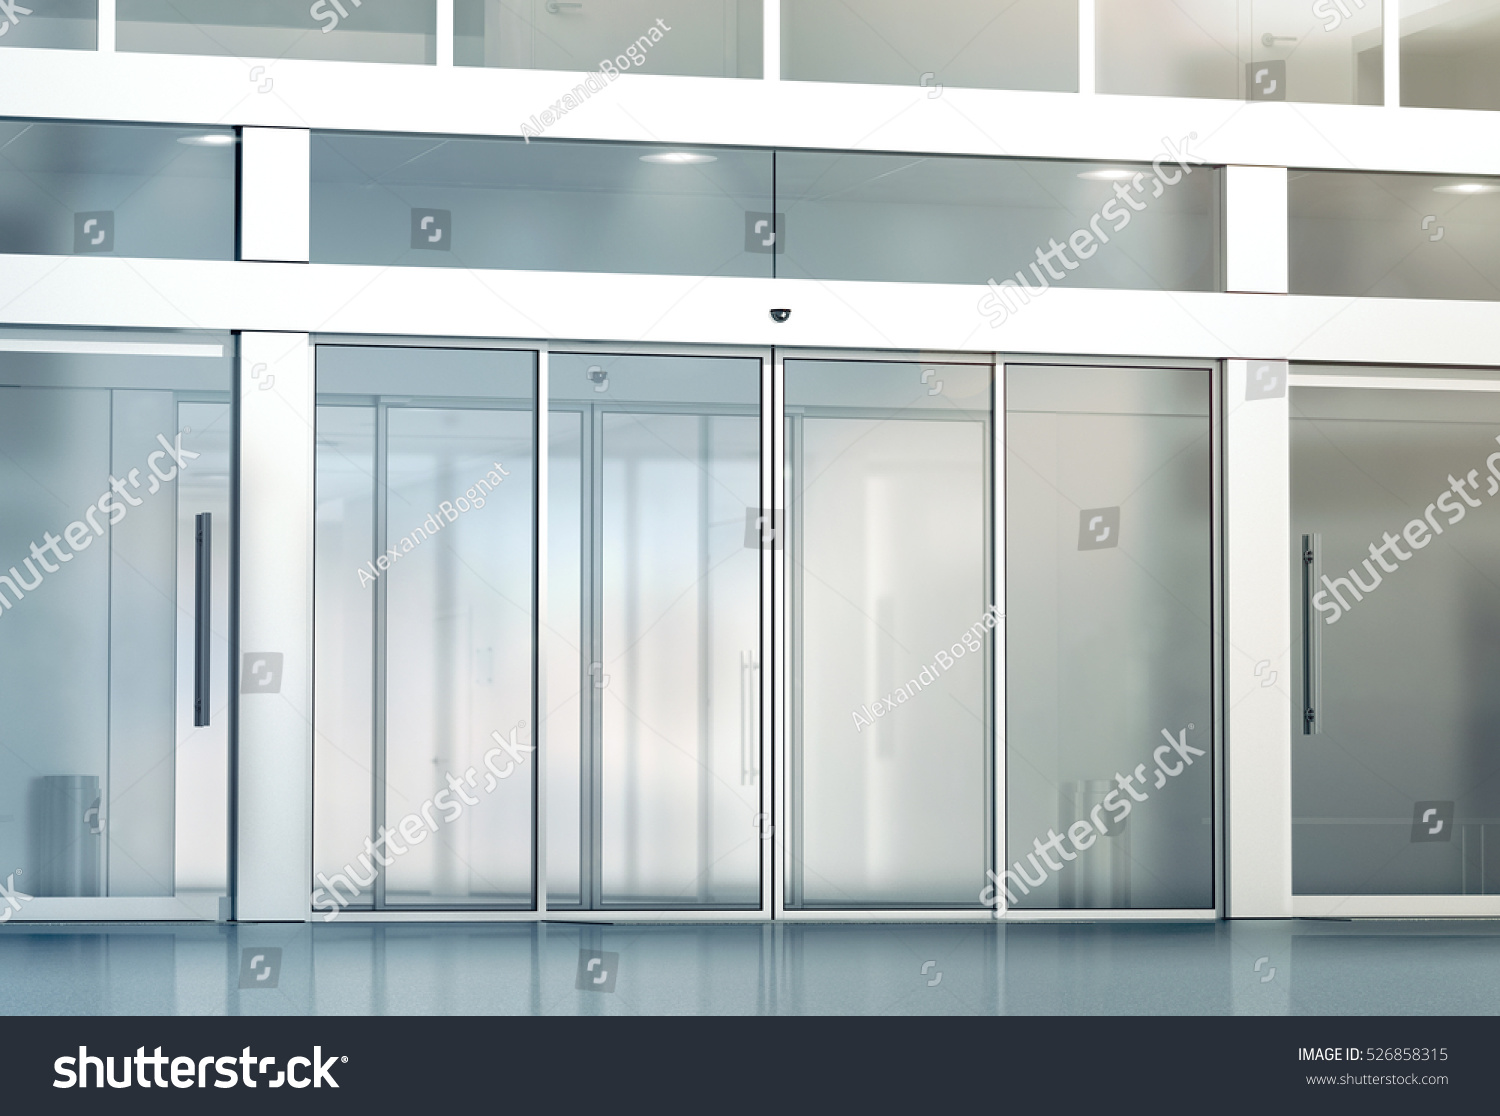 Download Blank Sliding Glass Doors Entrance Mockup Stock Illustration 526858315 - Shutterstock